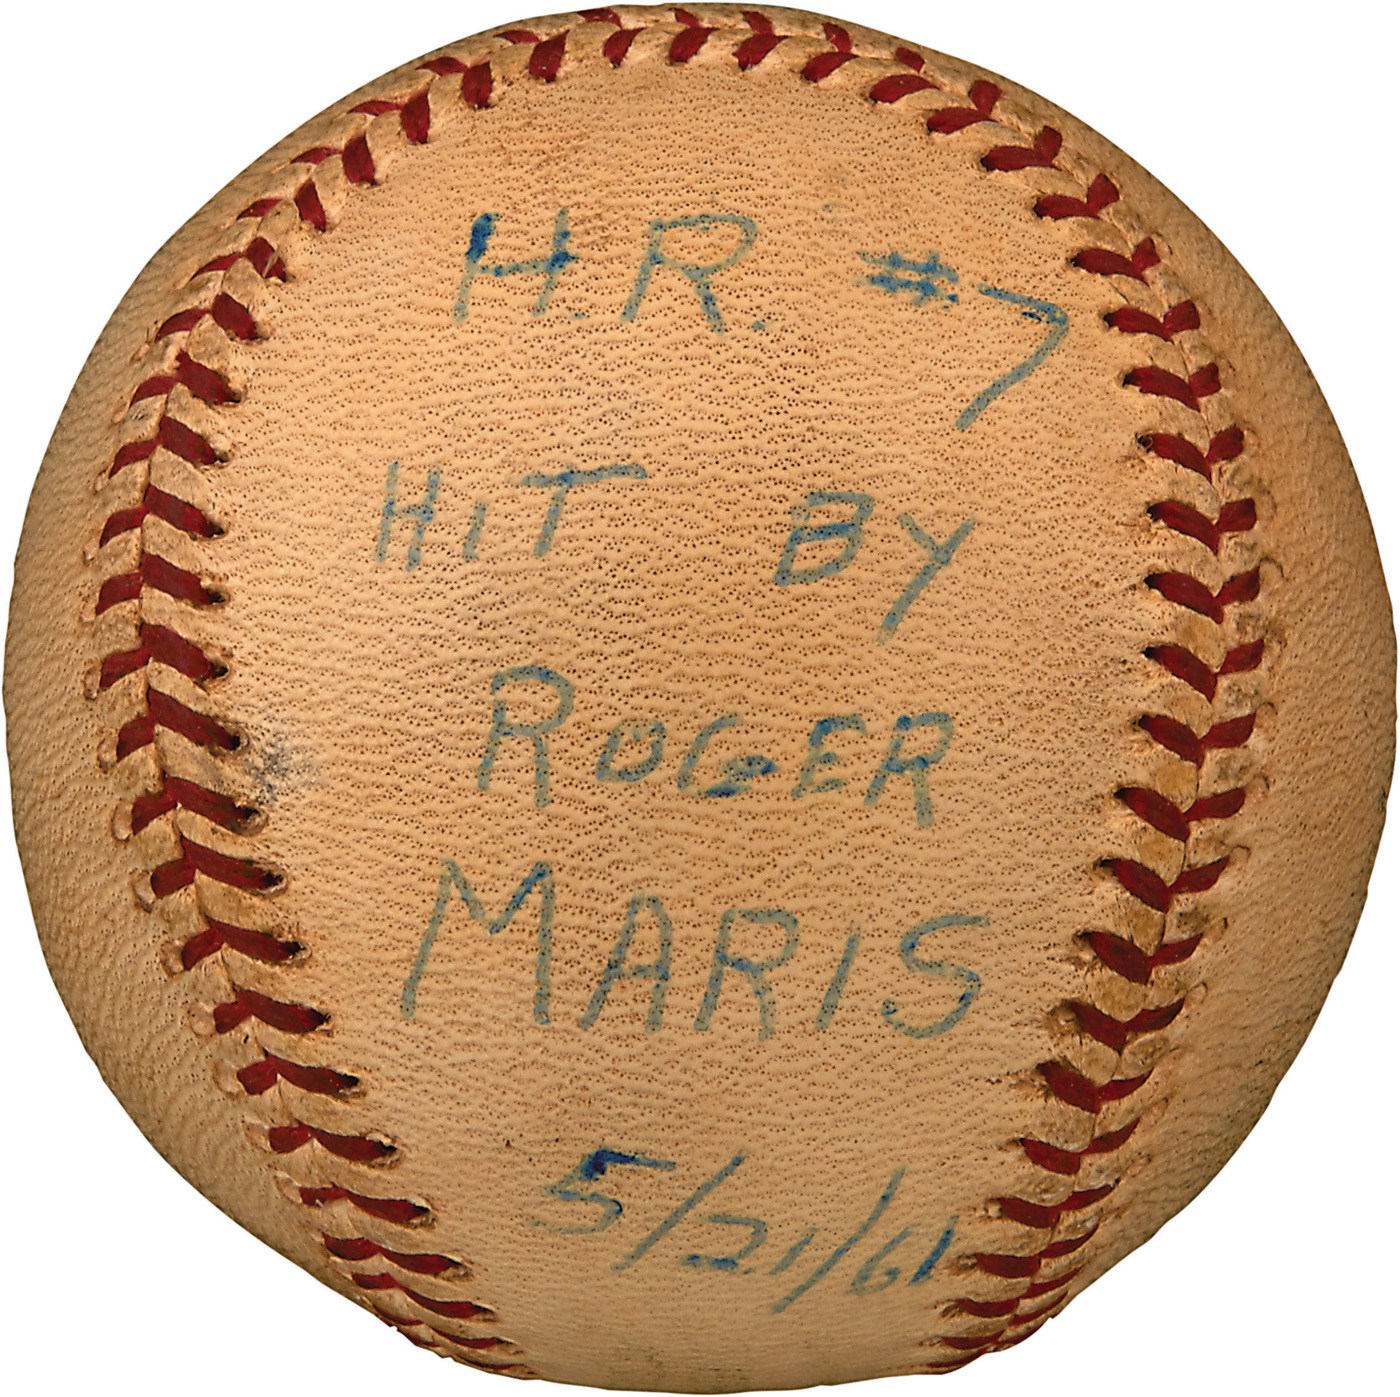 Mantle and Maris - 1961 Roger Maris #7 Home Run Baseball w/Photo Documentation